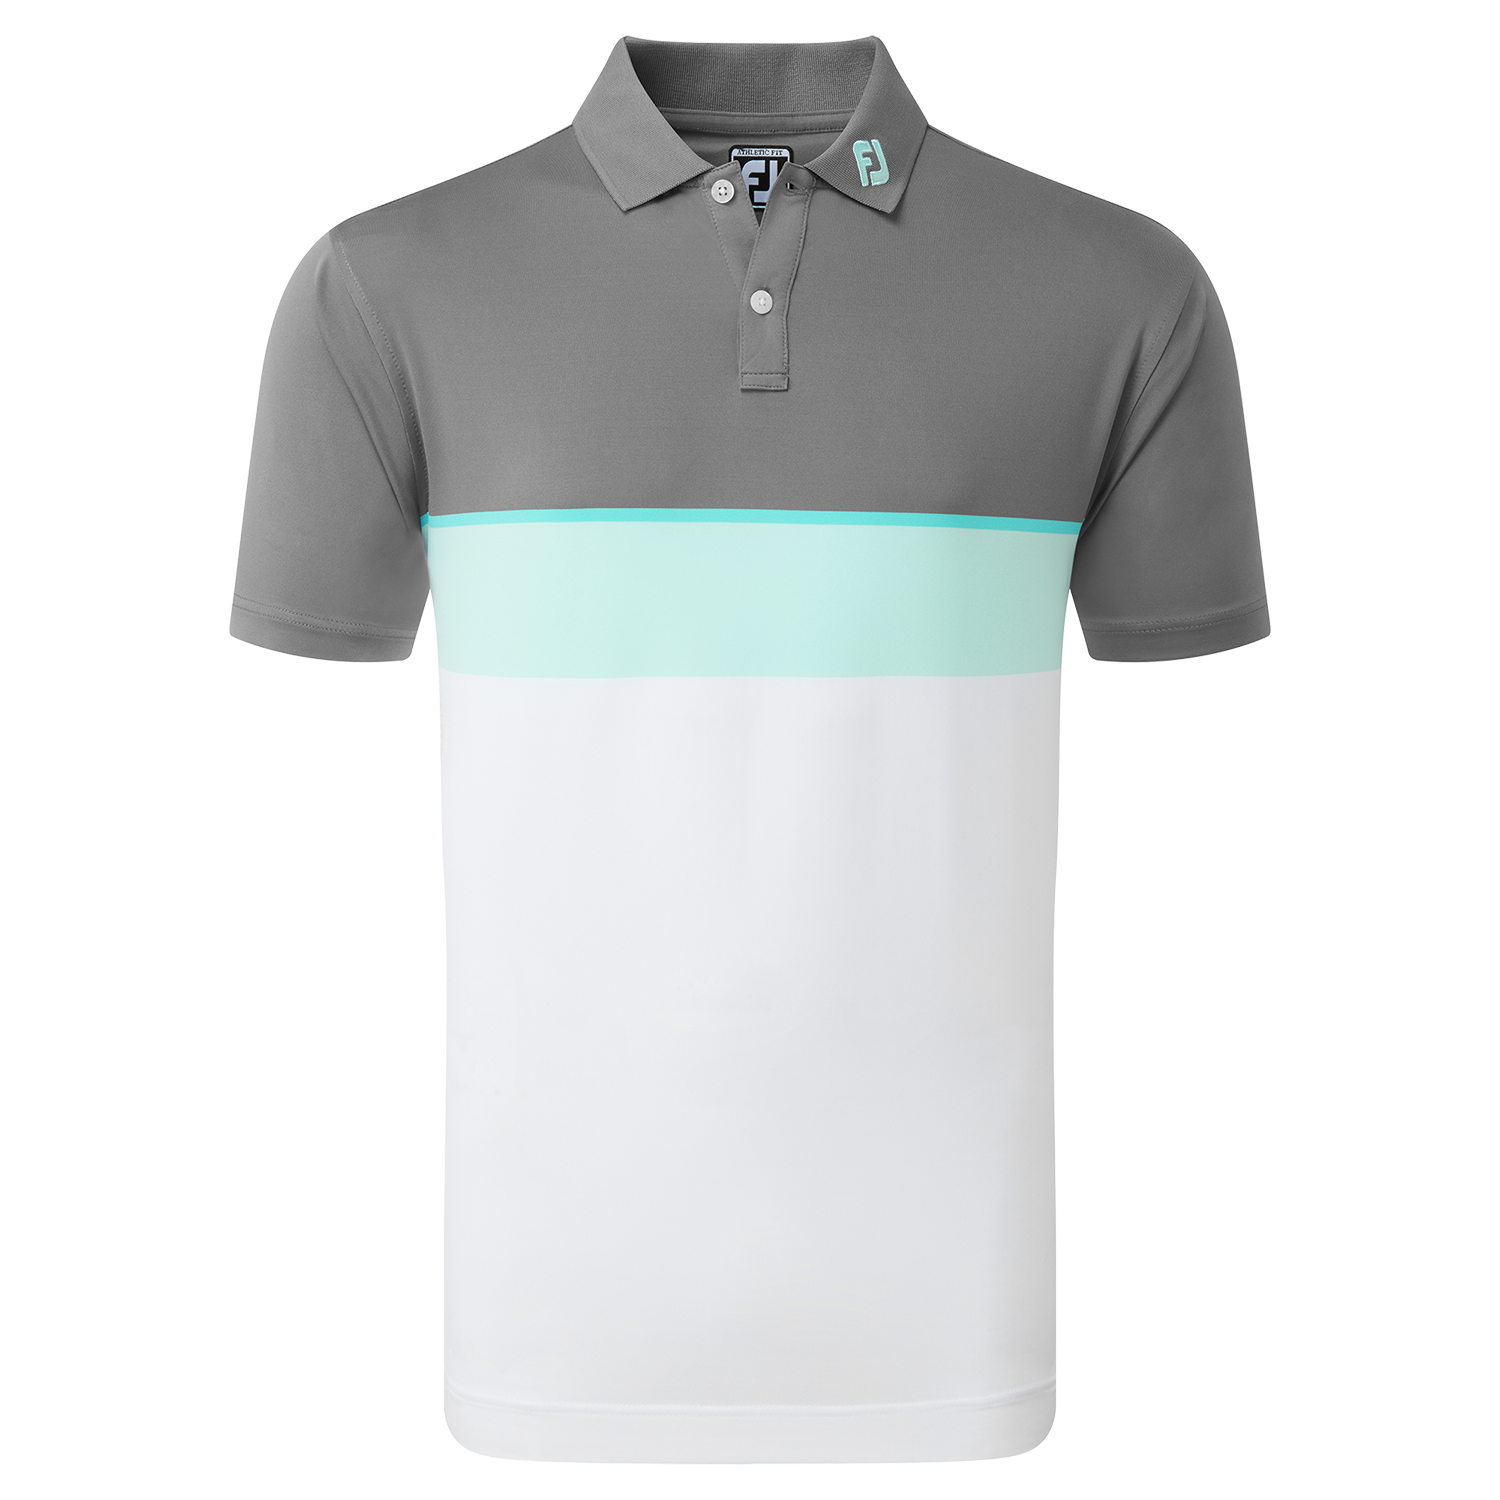 FootJoy Colour Theory Golf Polo Shirt